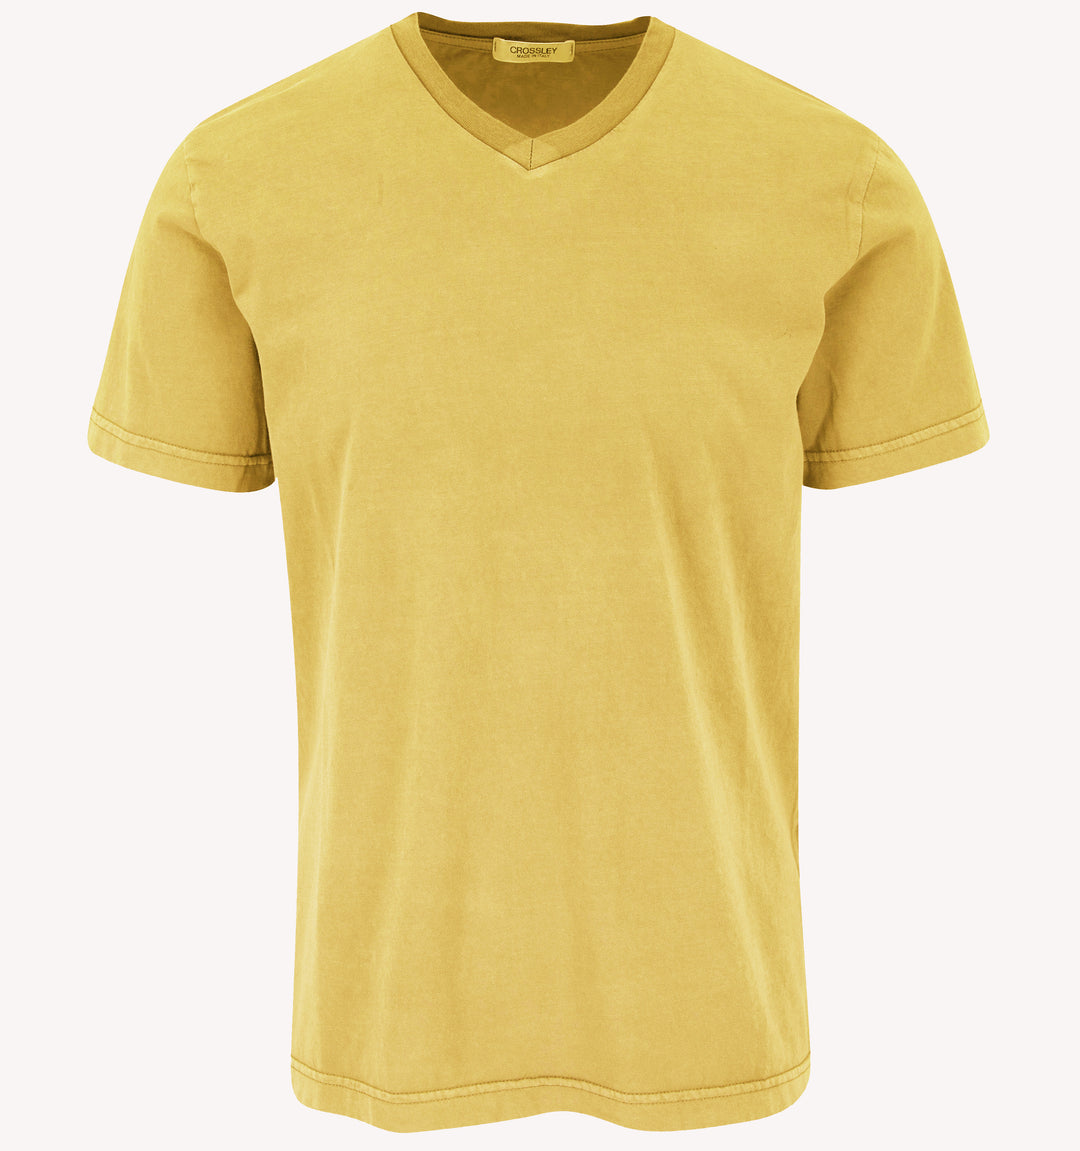 Crossley V-Neck T-Shirt in Yellow